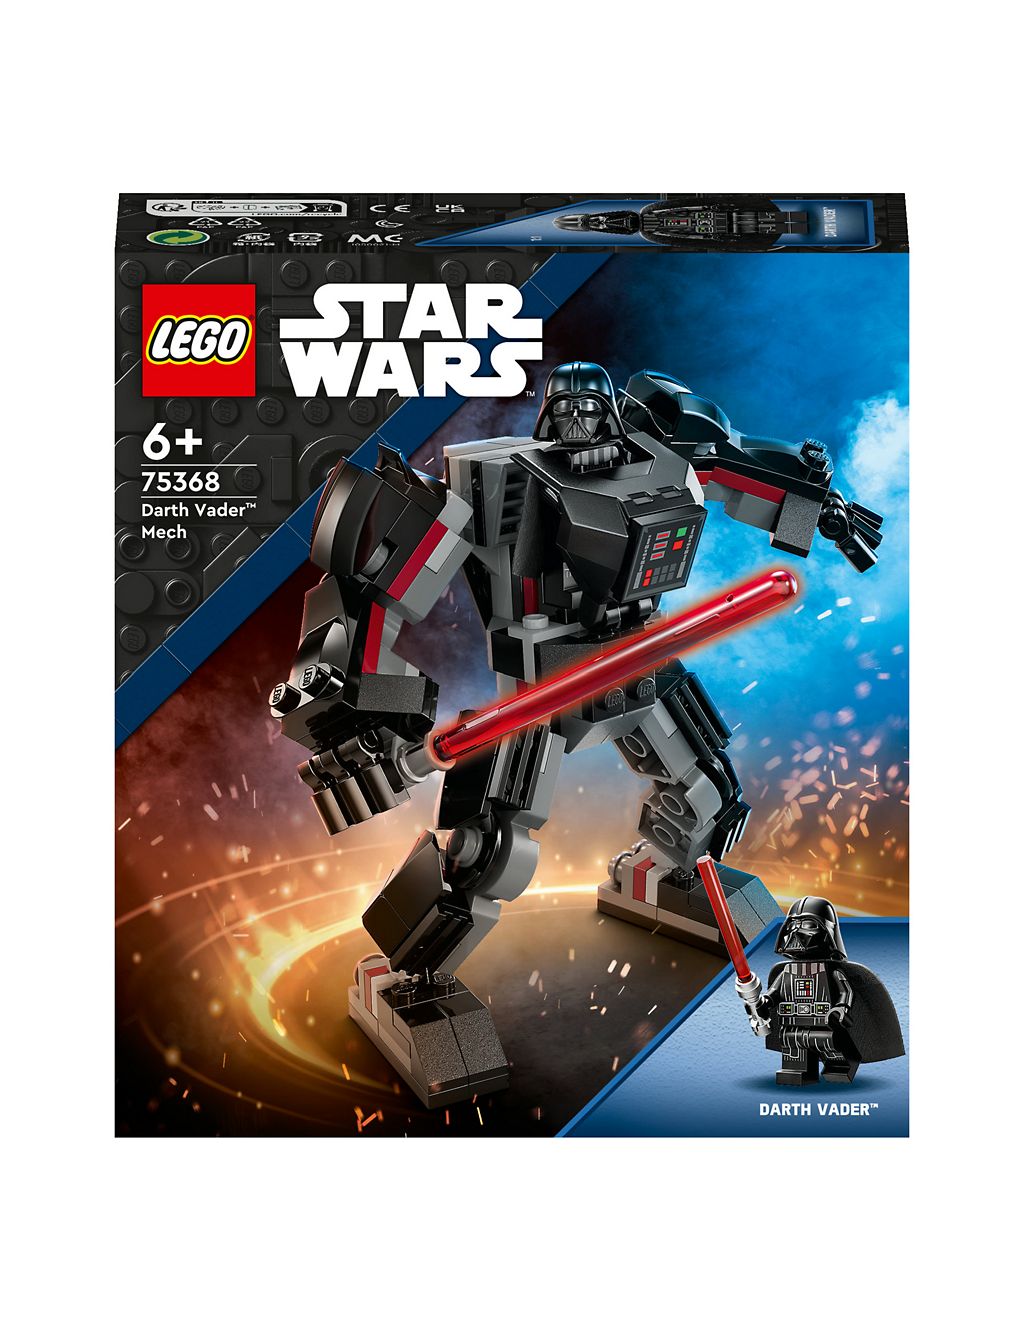 LEGO Star Wars Darth Vader Mech Building Toy 75368 (6+ Yrs) 1 of 6